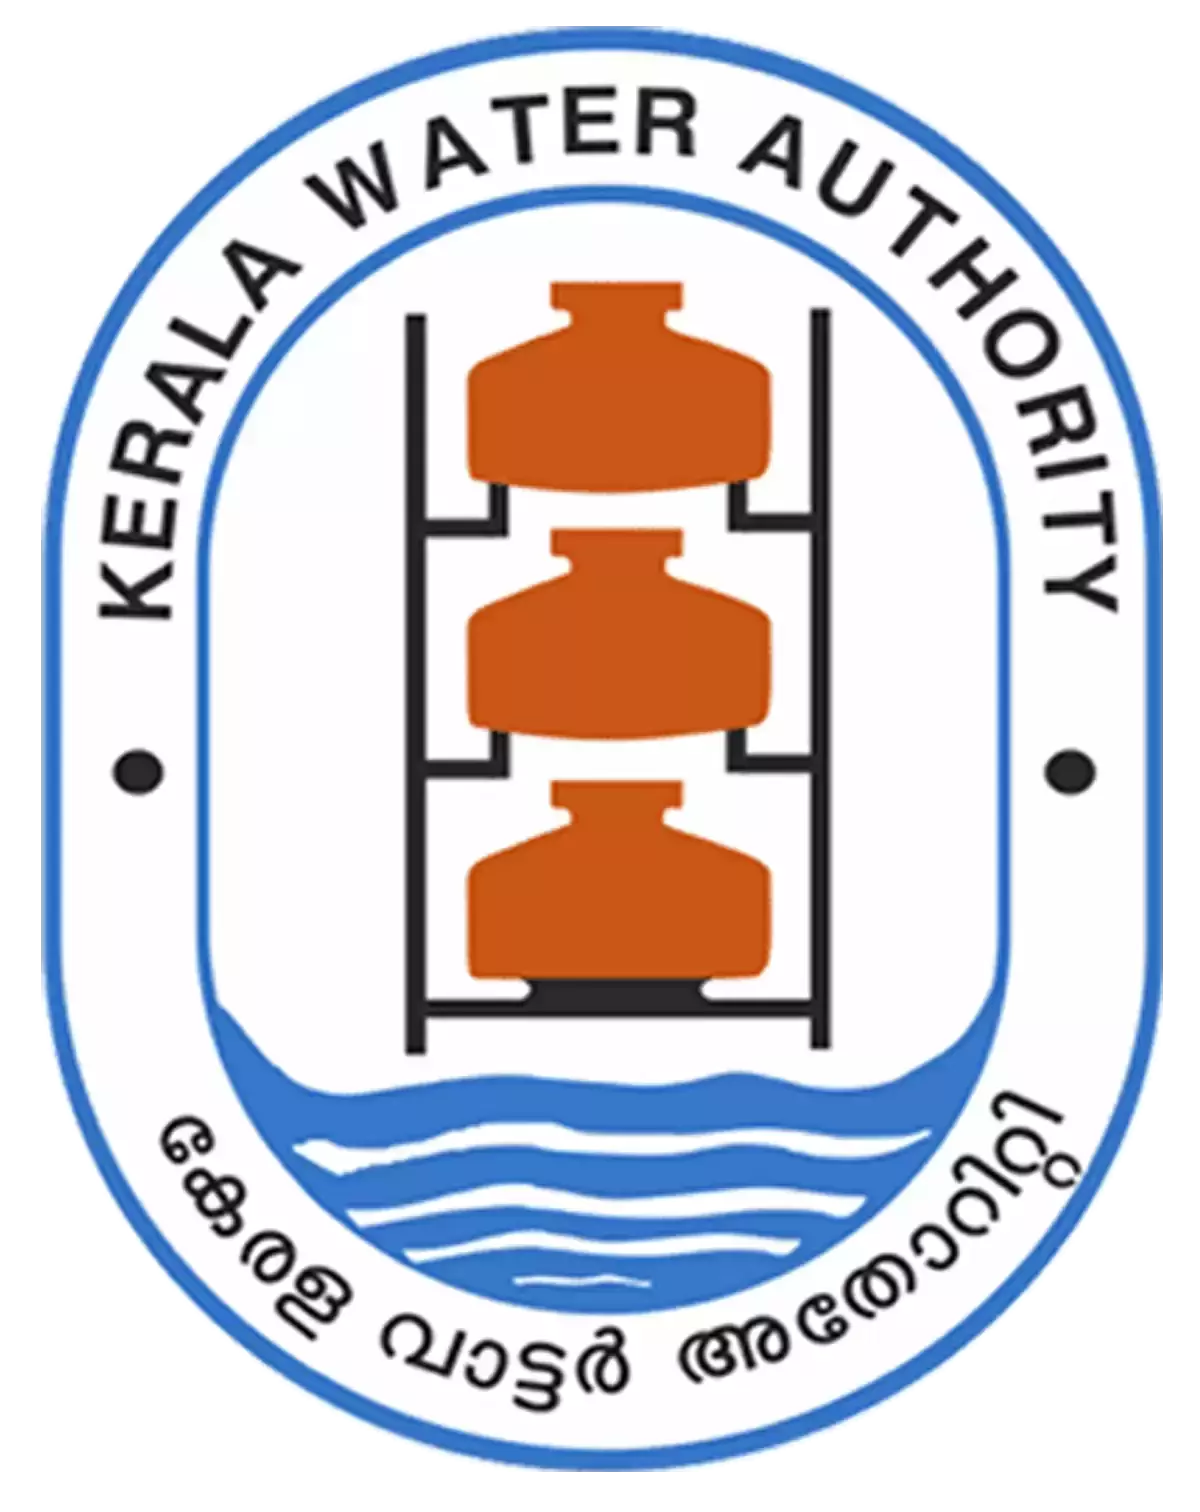 Water authority